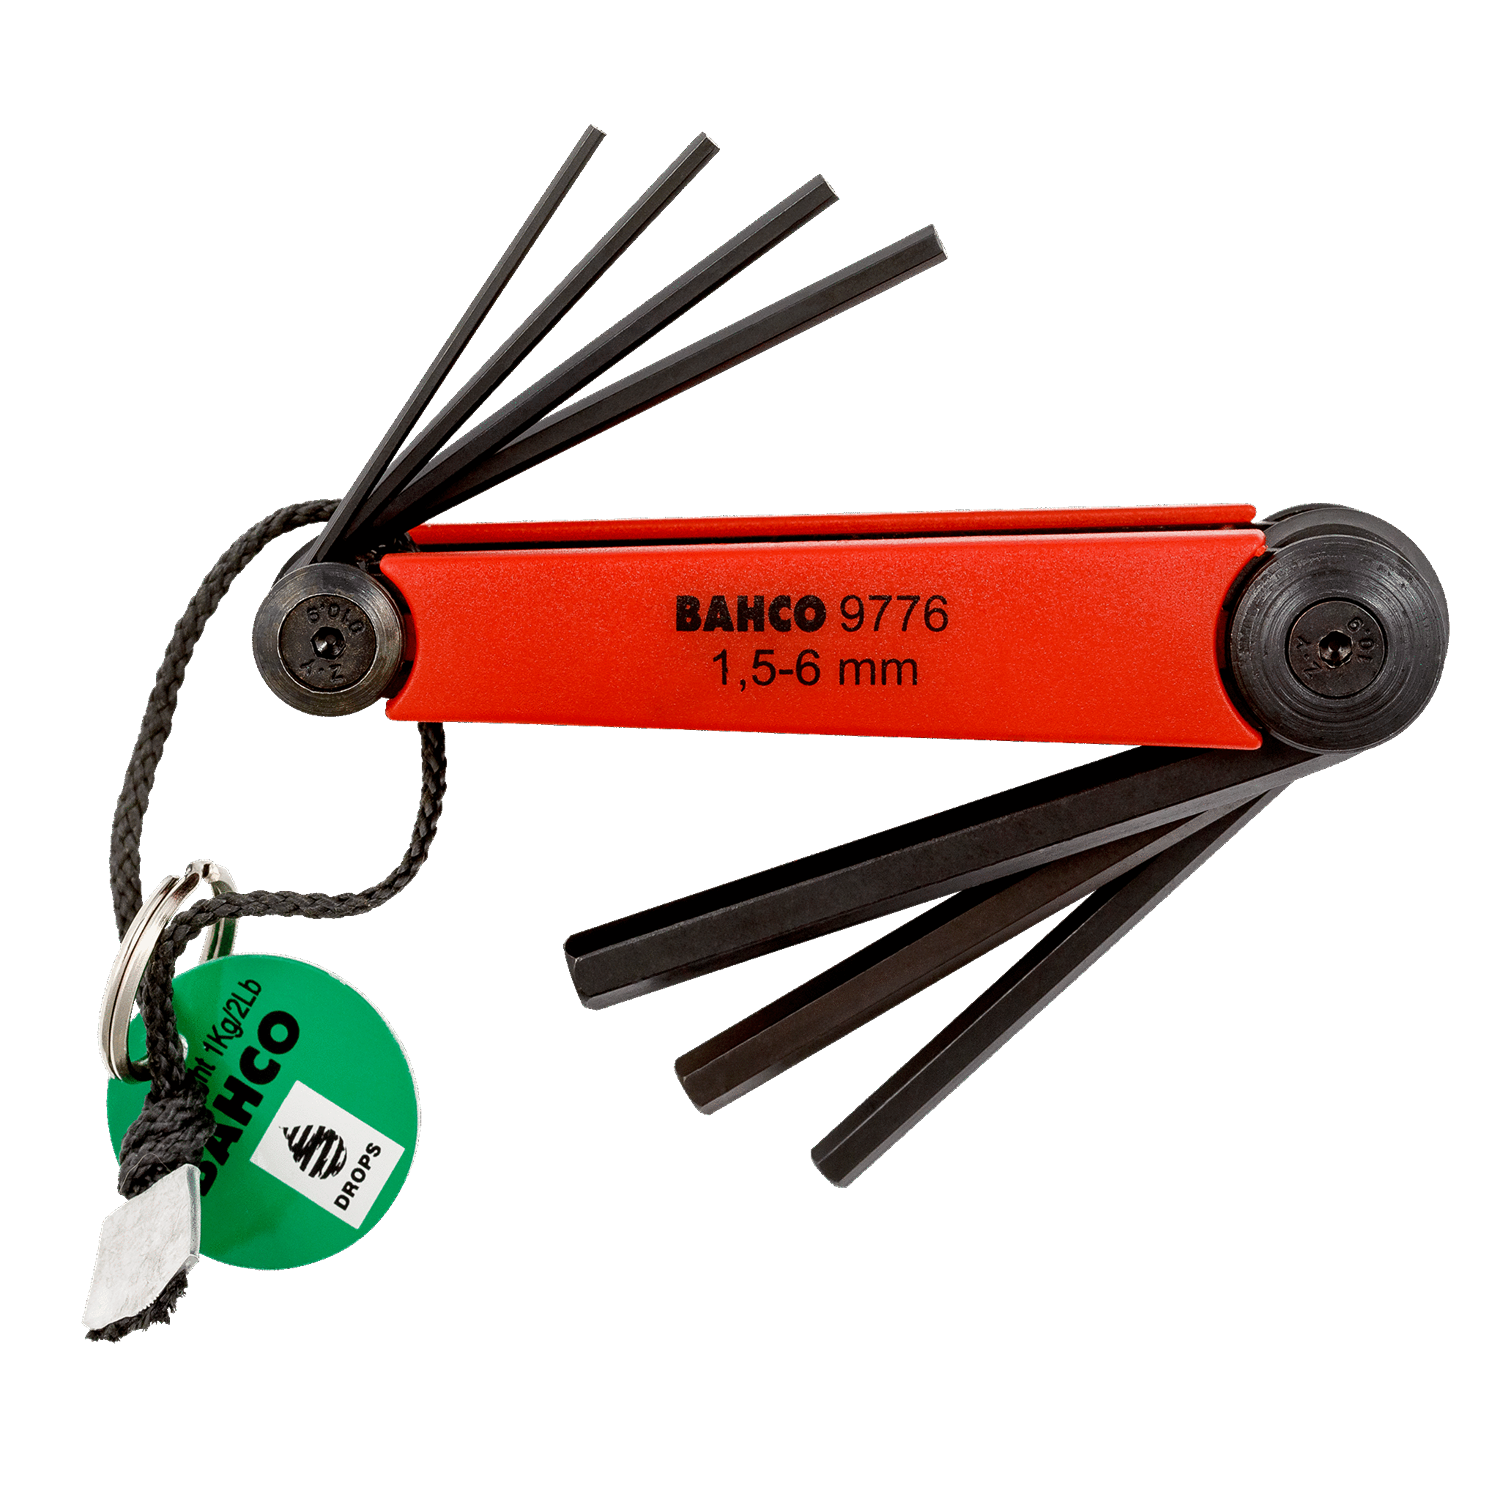 BAHCO TAHBE-9776 Metric Hex Folding L-Key Set, 1.5-6mm - 7 pcs - Premium Hex Folding L-Key Set from BAHCO - Shop now at Yew Aik.